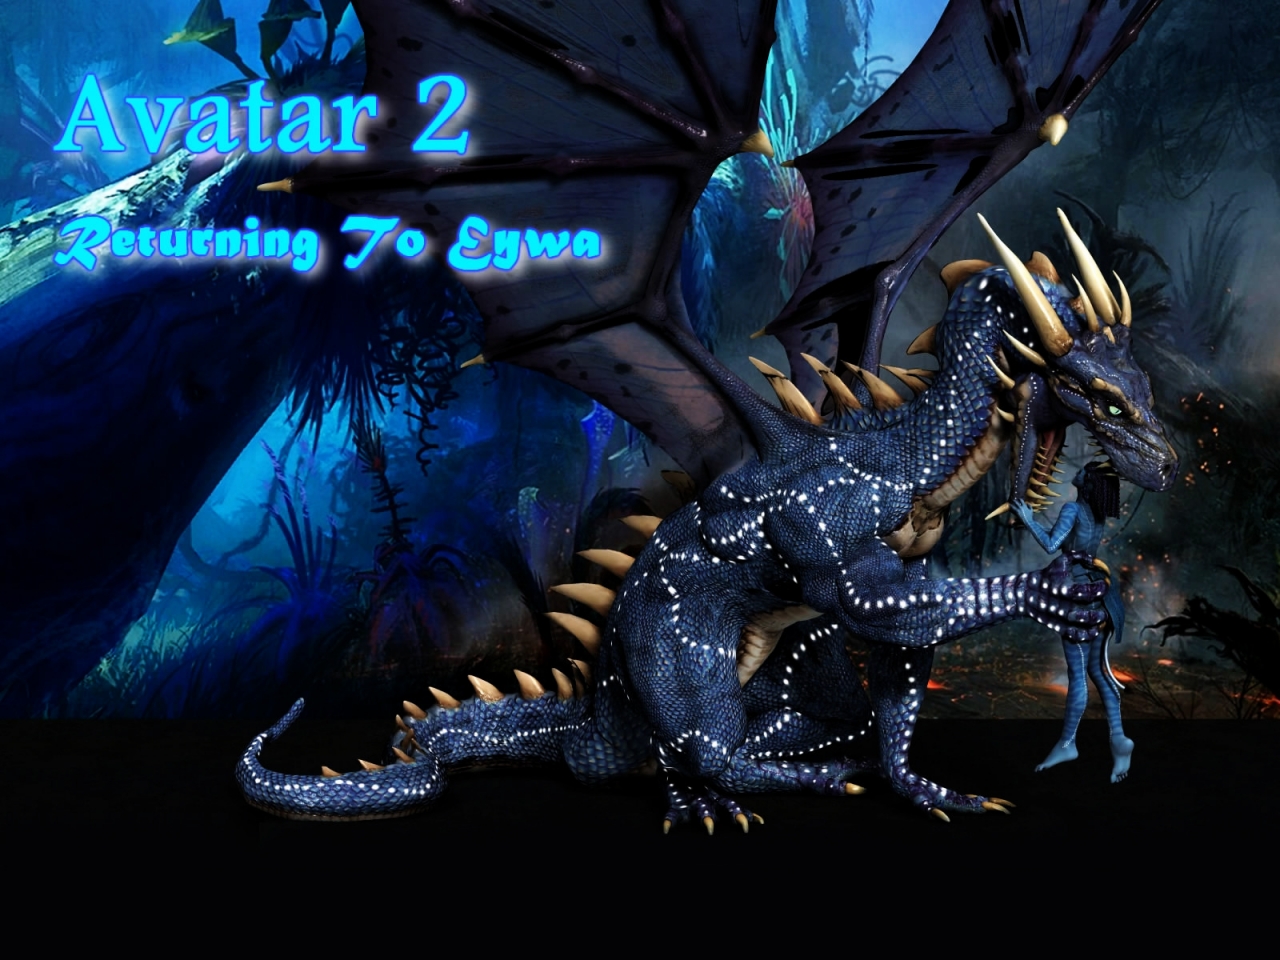 2015 Avatar 2 Returning to Eywa for 1280 x 960 resolution